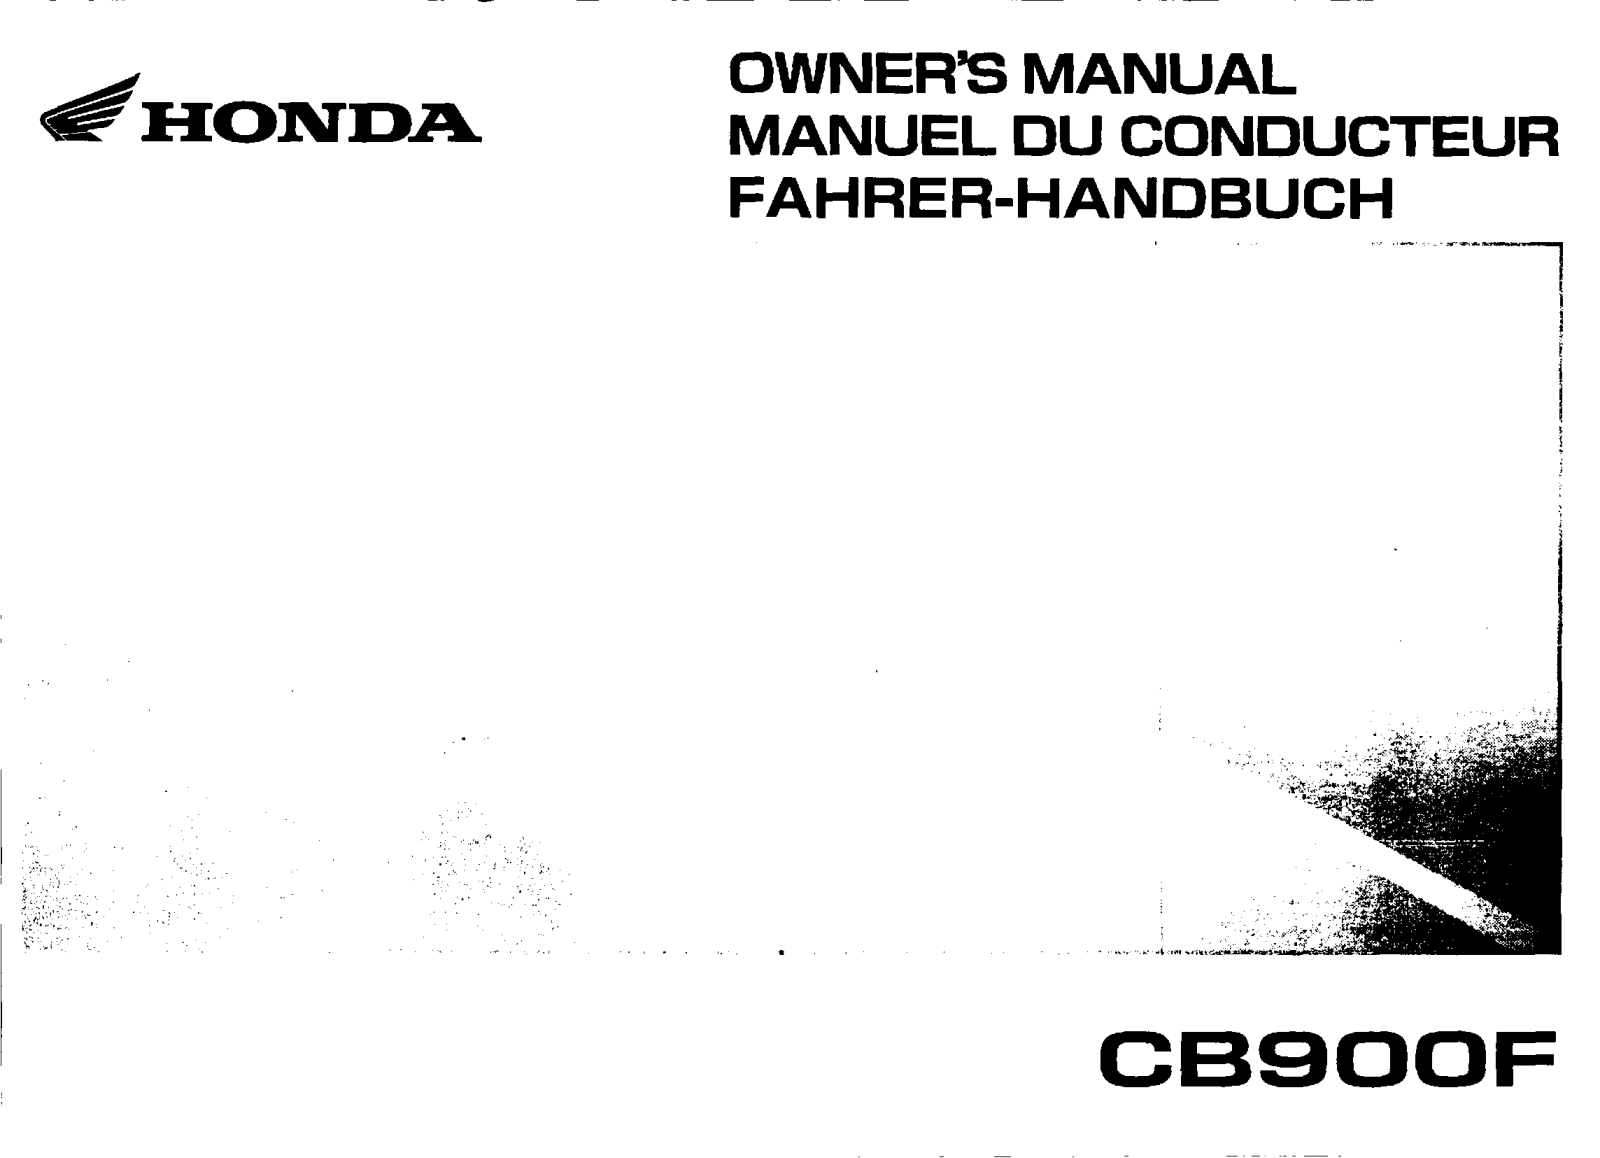 Honda CB900F 2004 Owner's Manual